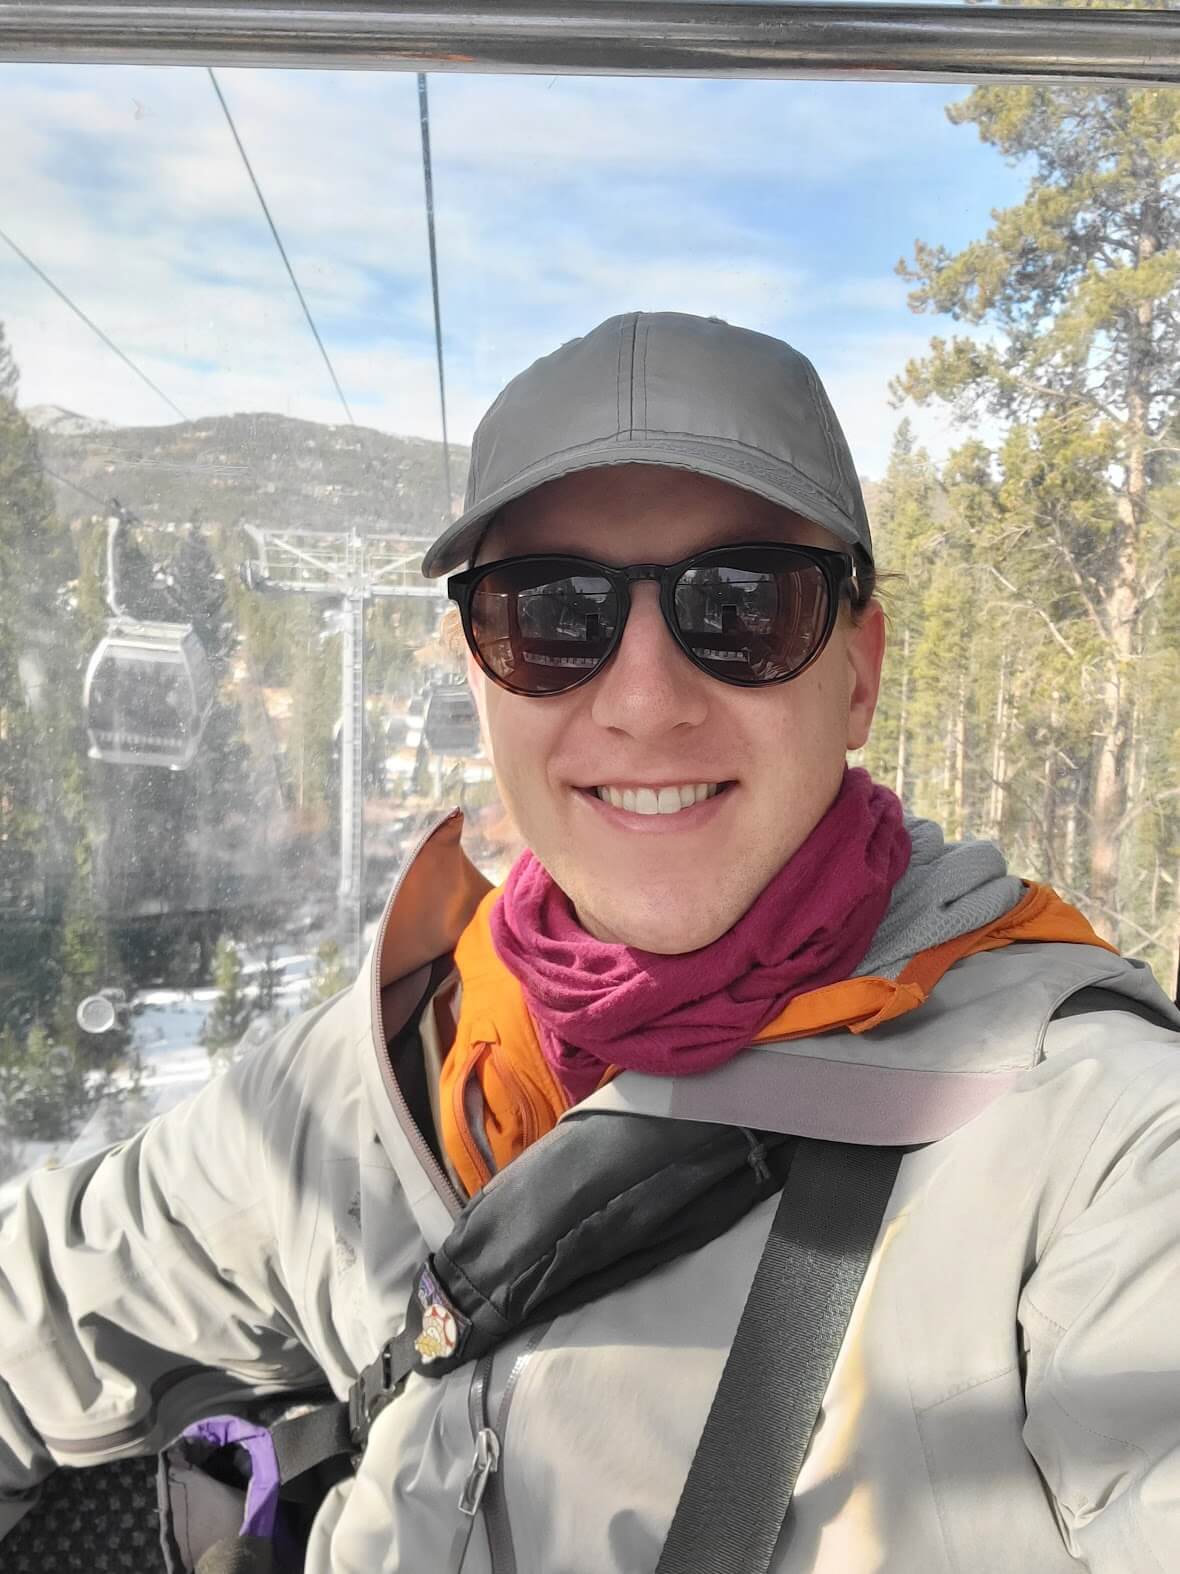 A headshot of Kris riding a gondola in the mountains